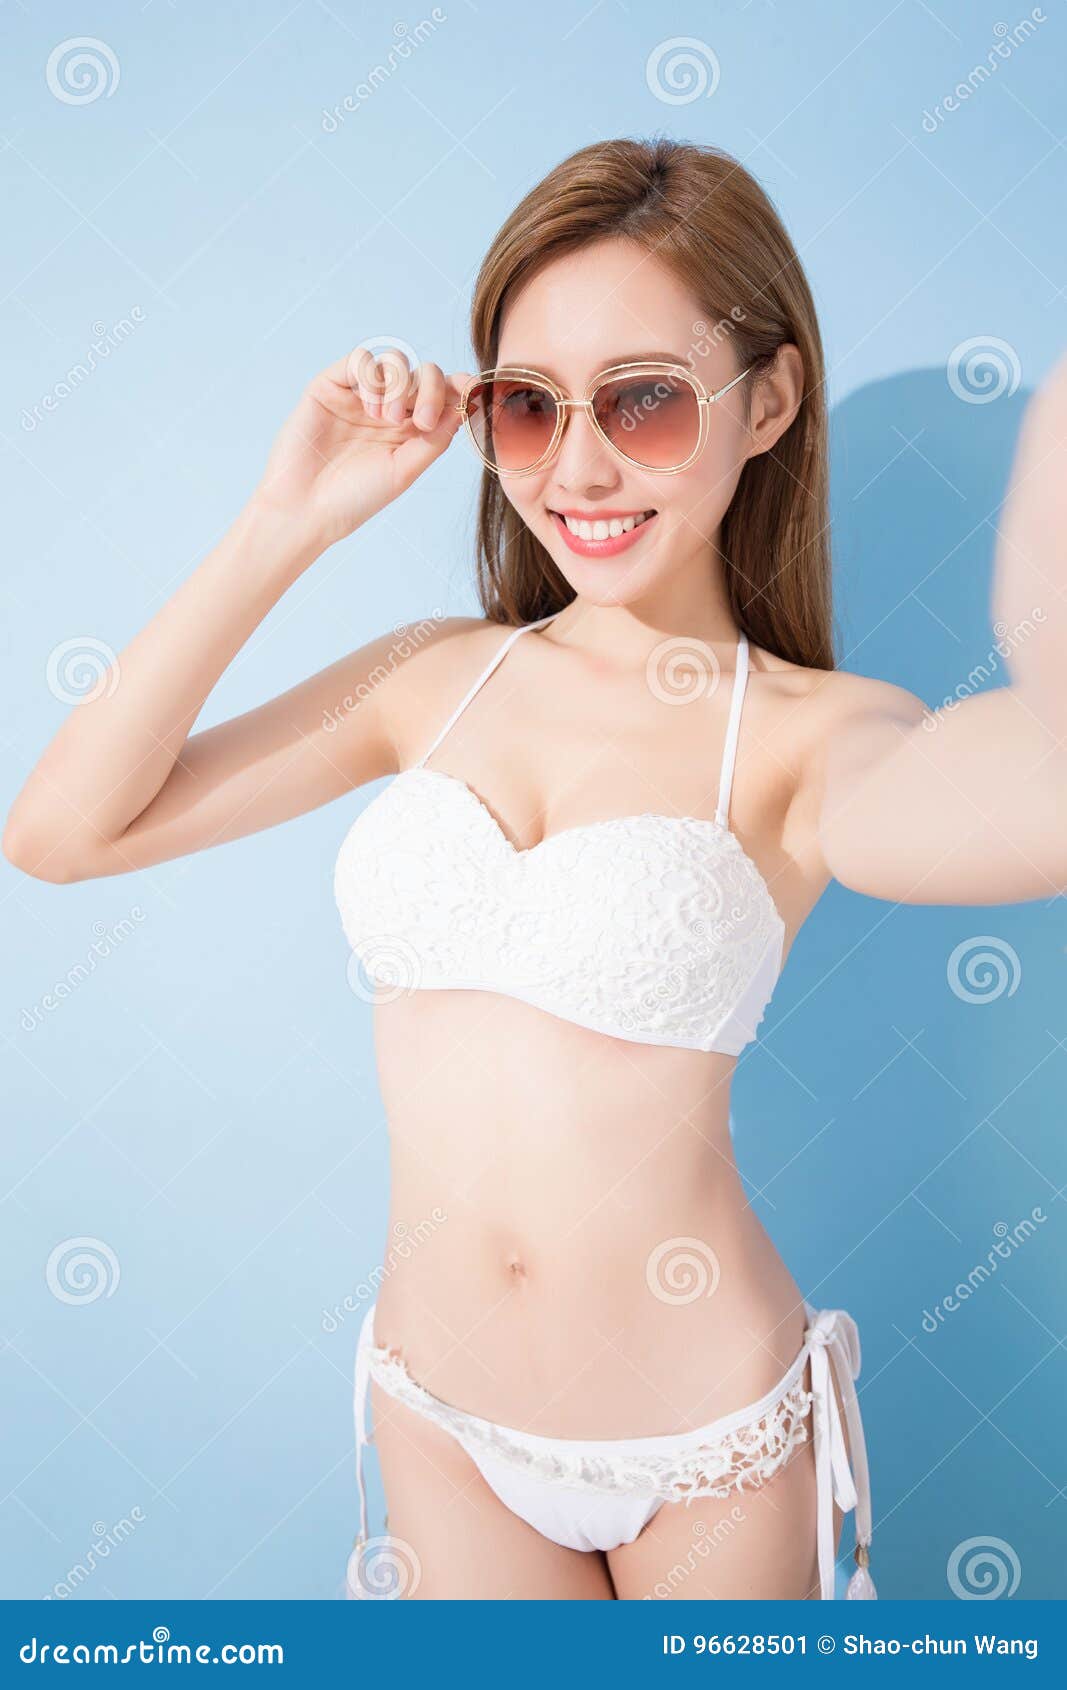 japanese women bikini selfies